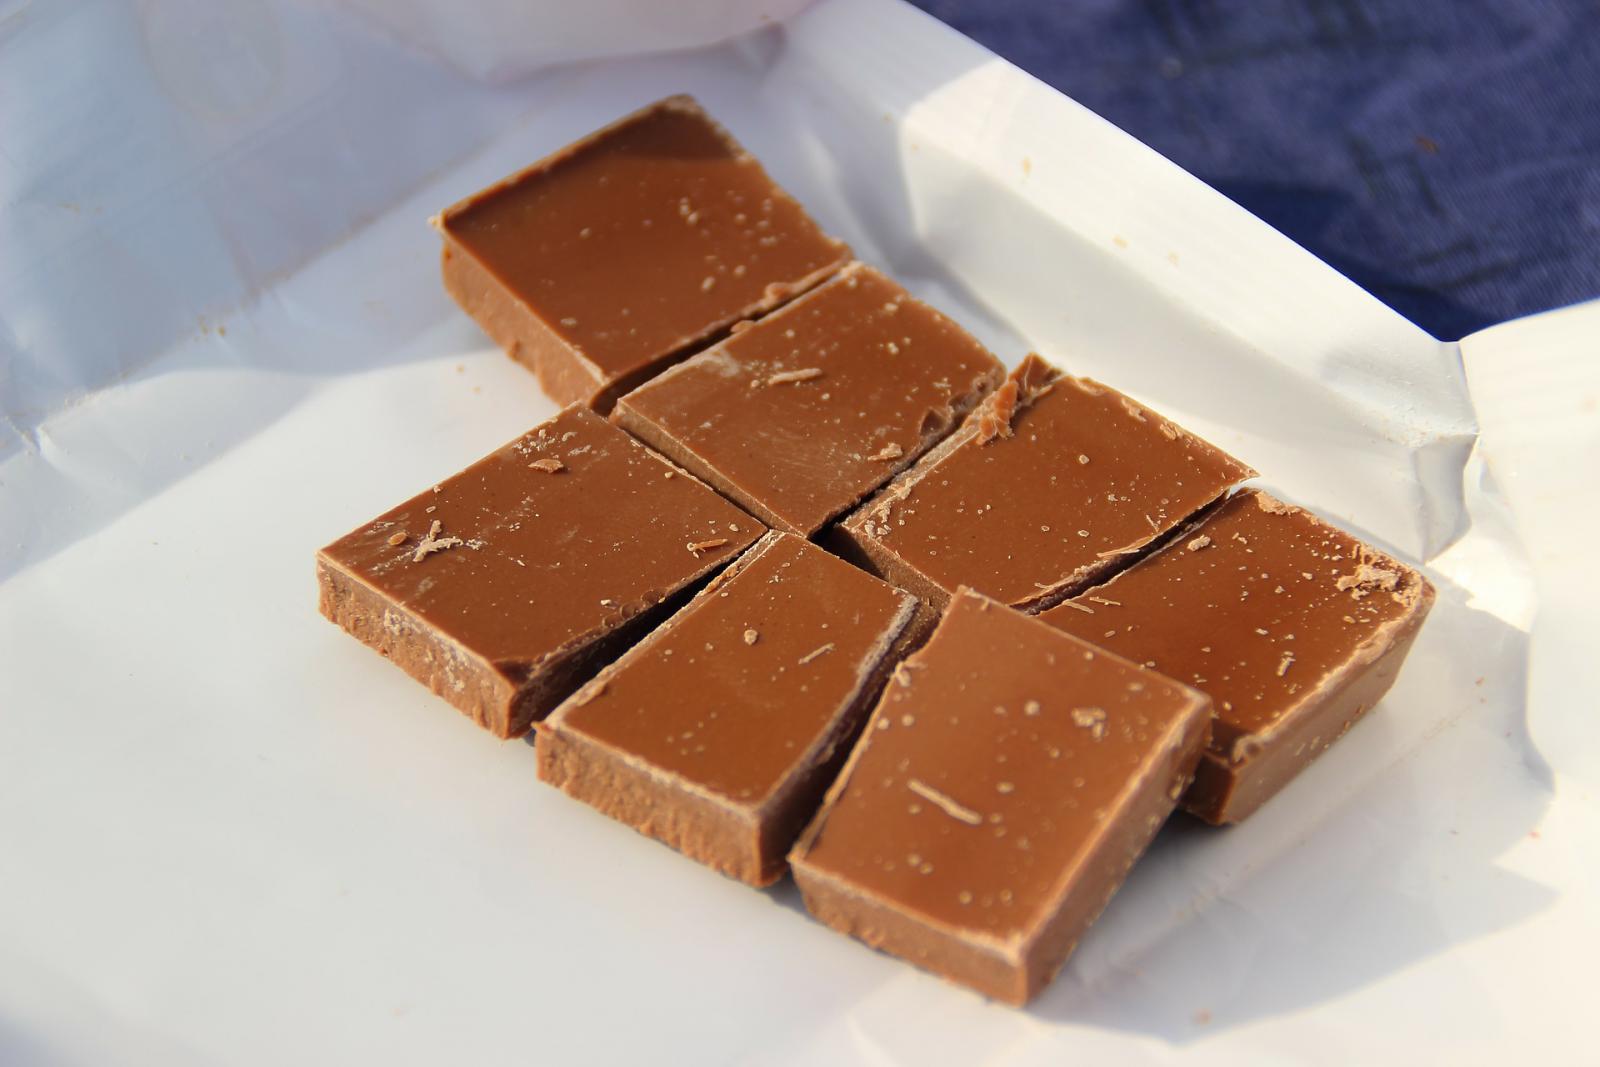 Chocolate bar. Photo credit: Pixabay